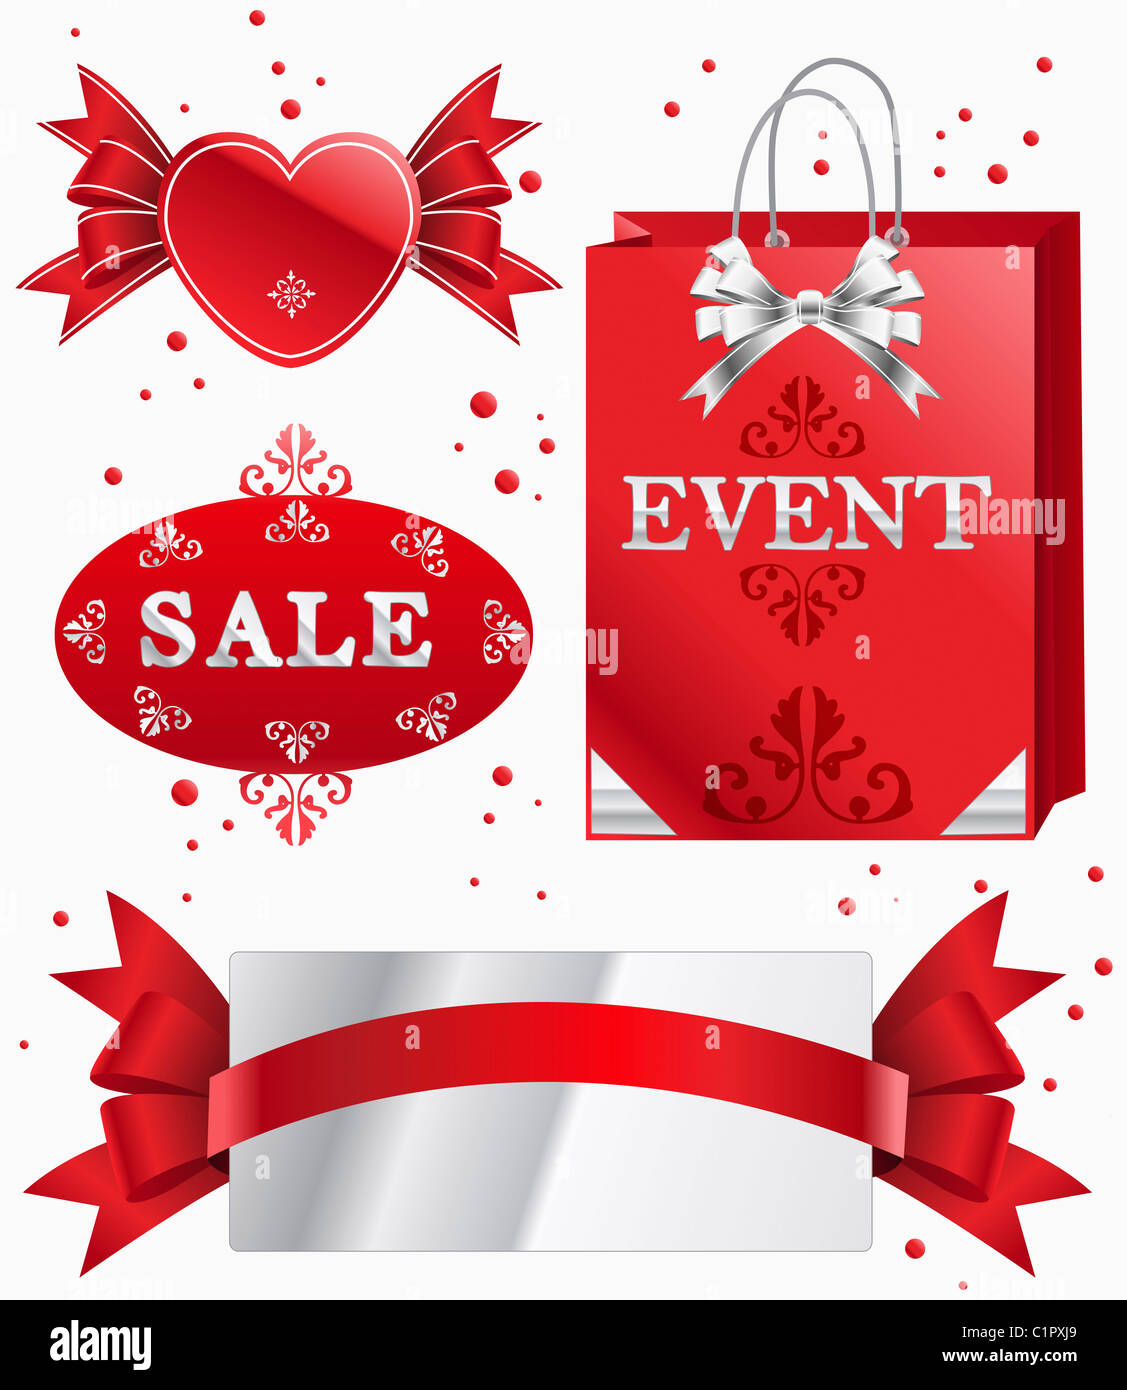 discount event illustration Stock Photo